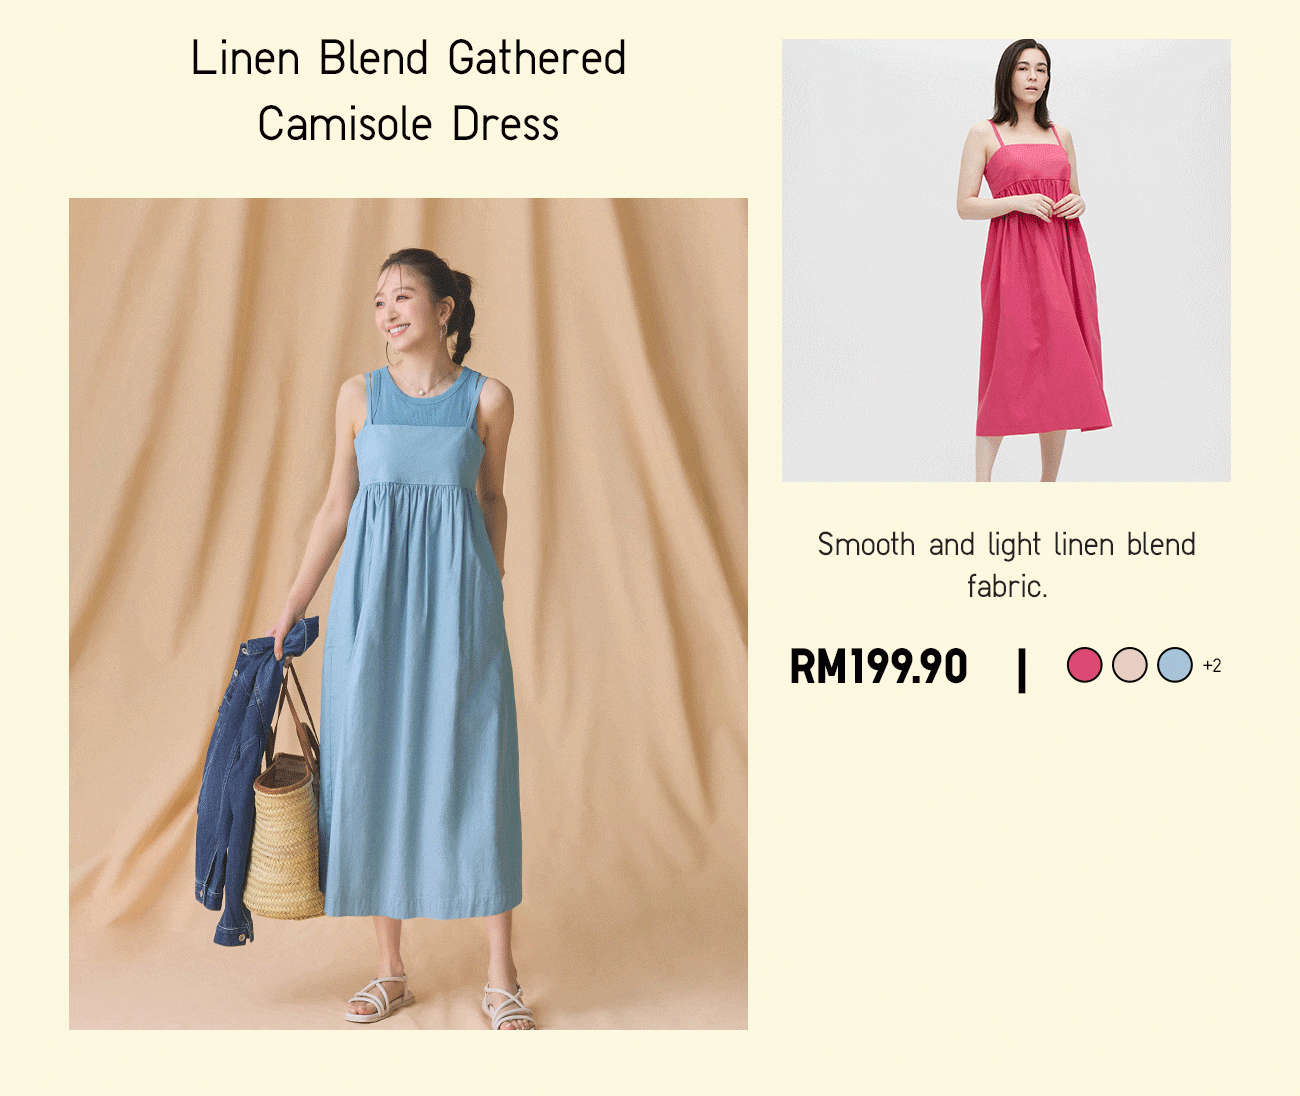 Linen Blend Gathered Camisole Dress